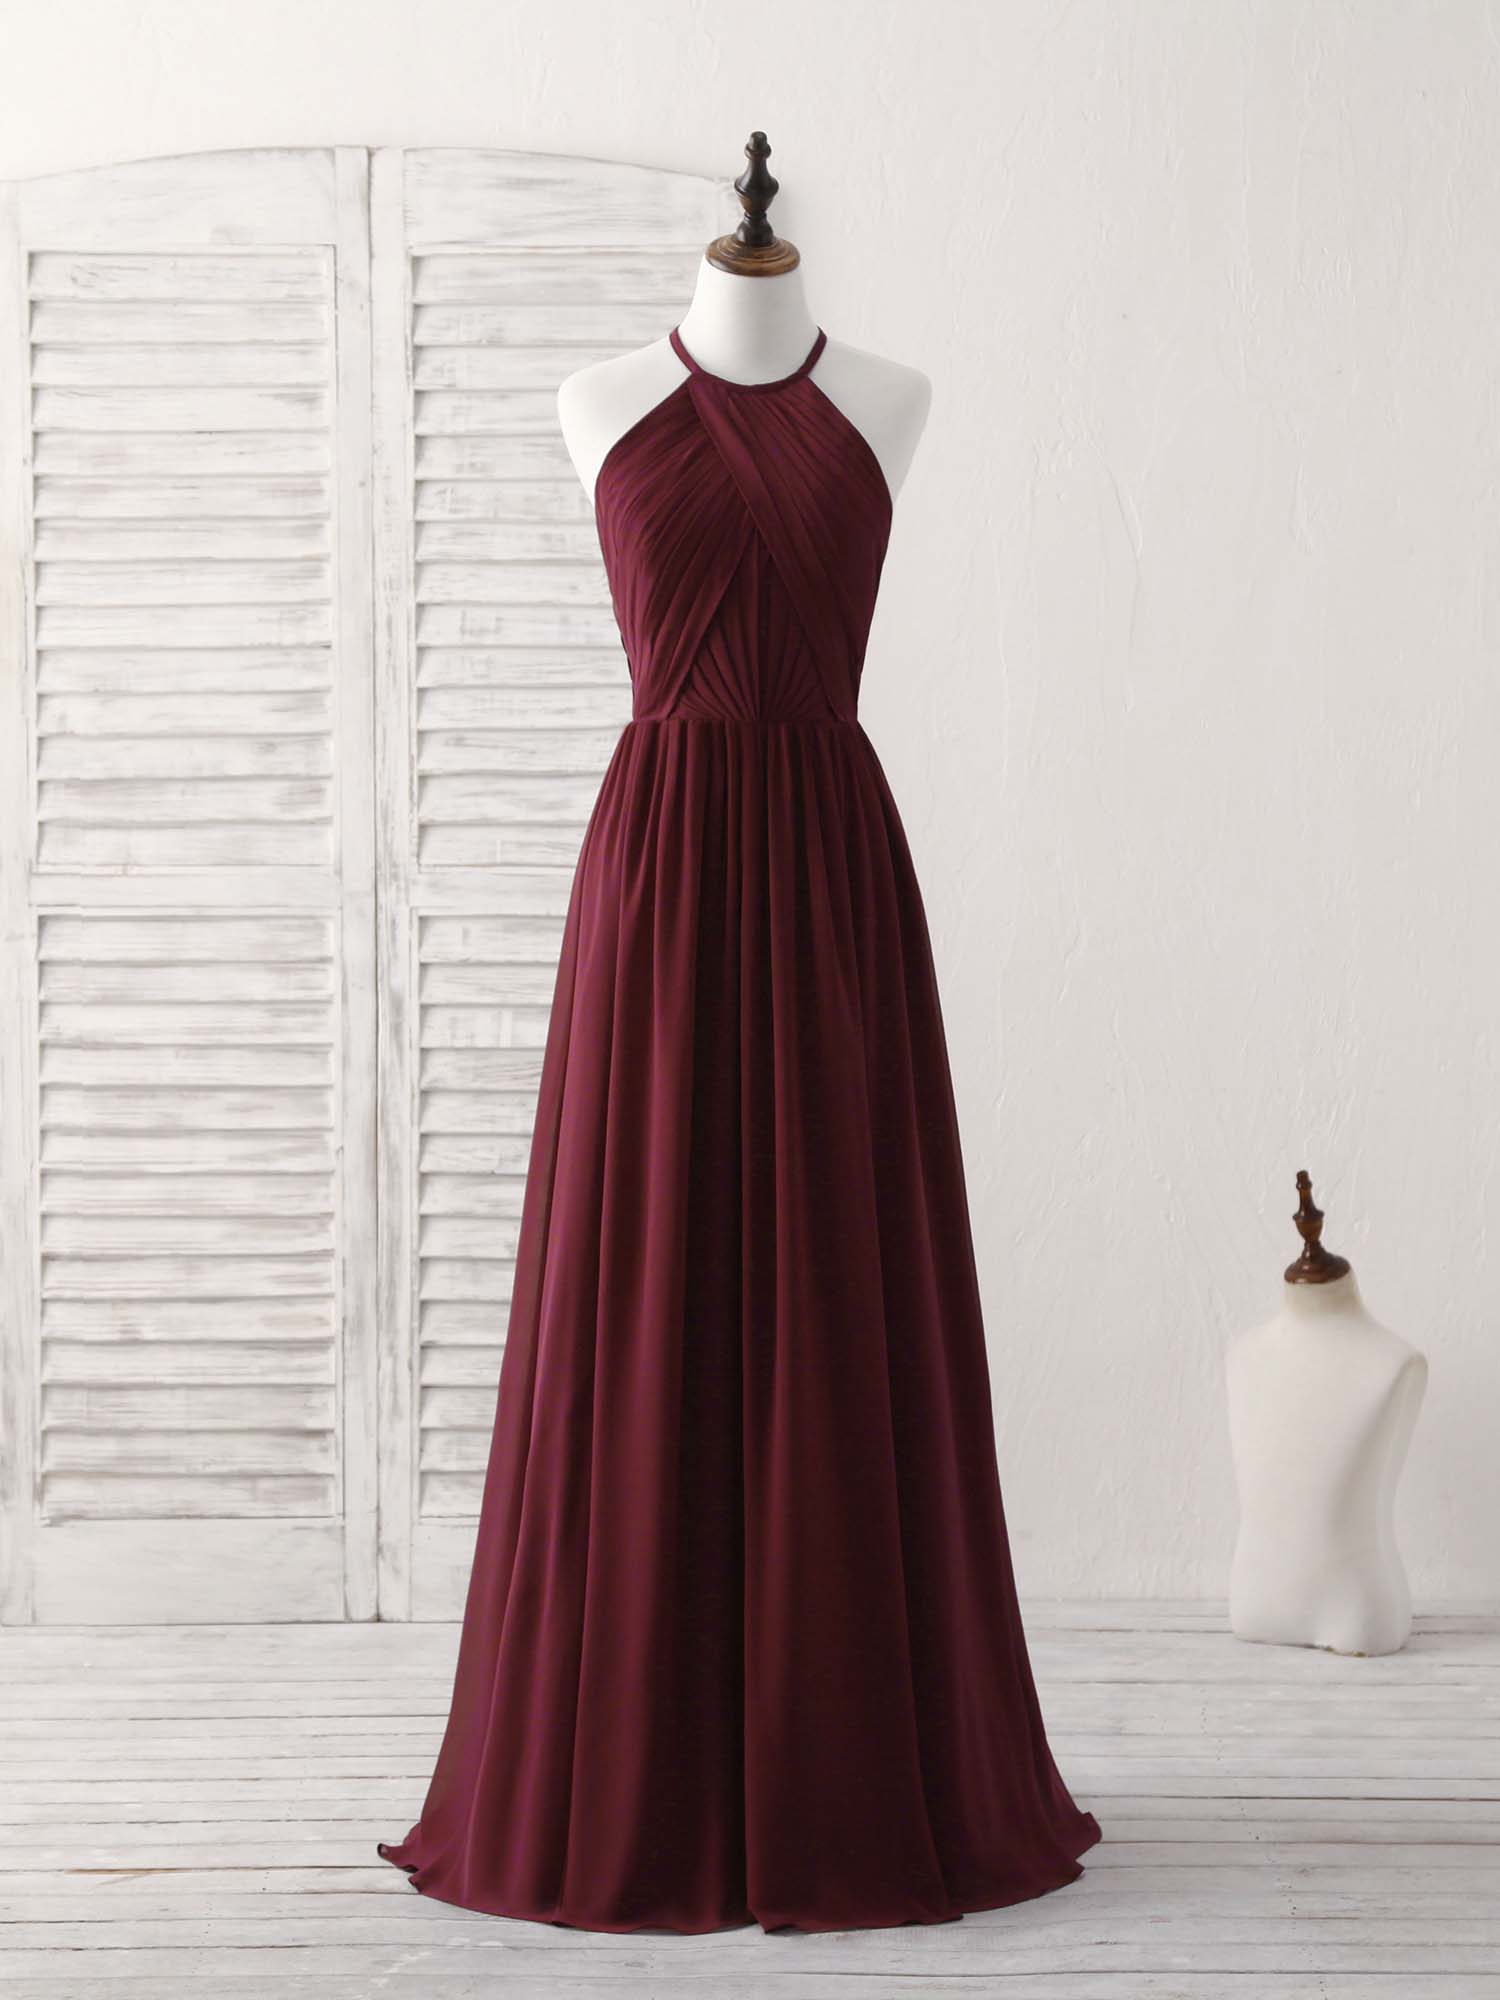 Simple Burgundy Chiffon Long Corset Prom Dress, Burgundy Evening Dress outfit, Bridesmaid Dresses Color